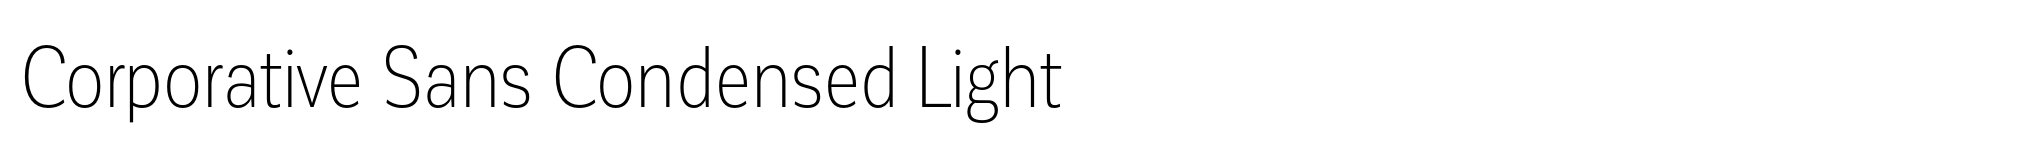 Corporative Sans Condensed Light image